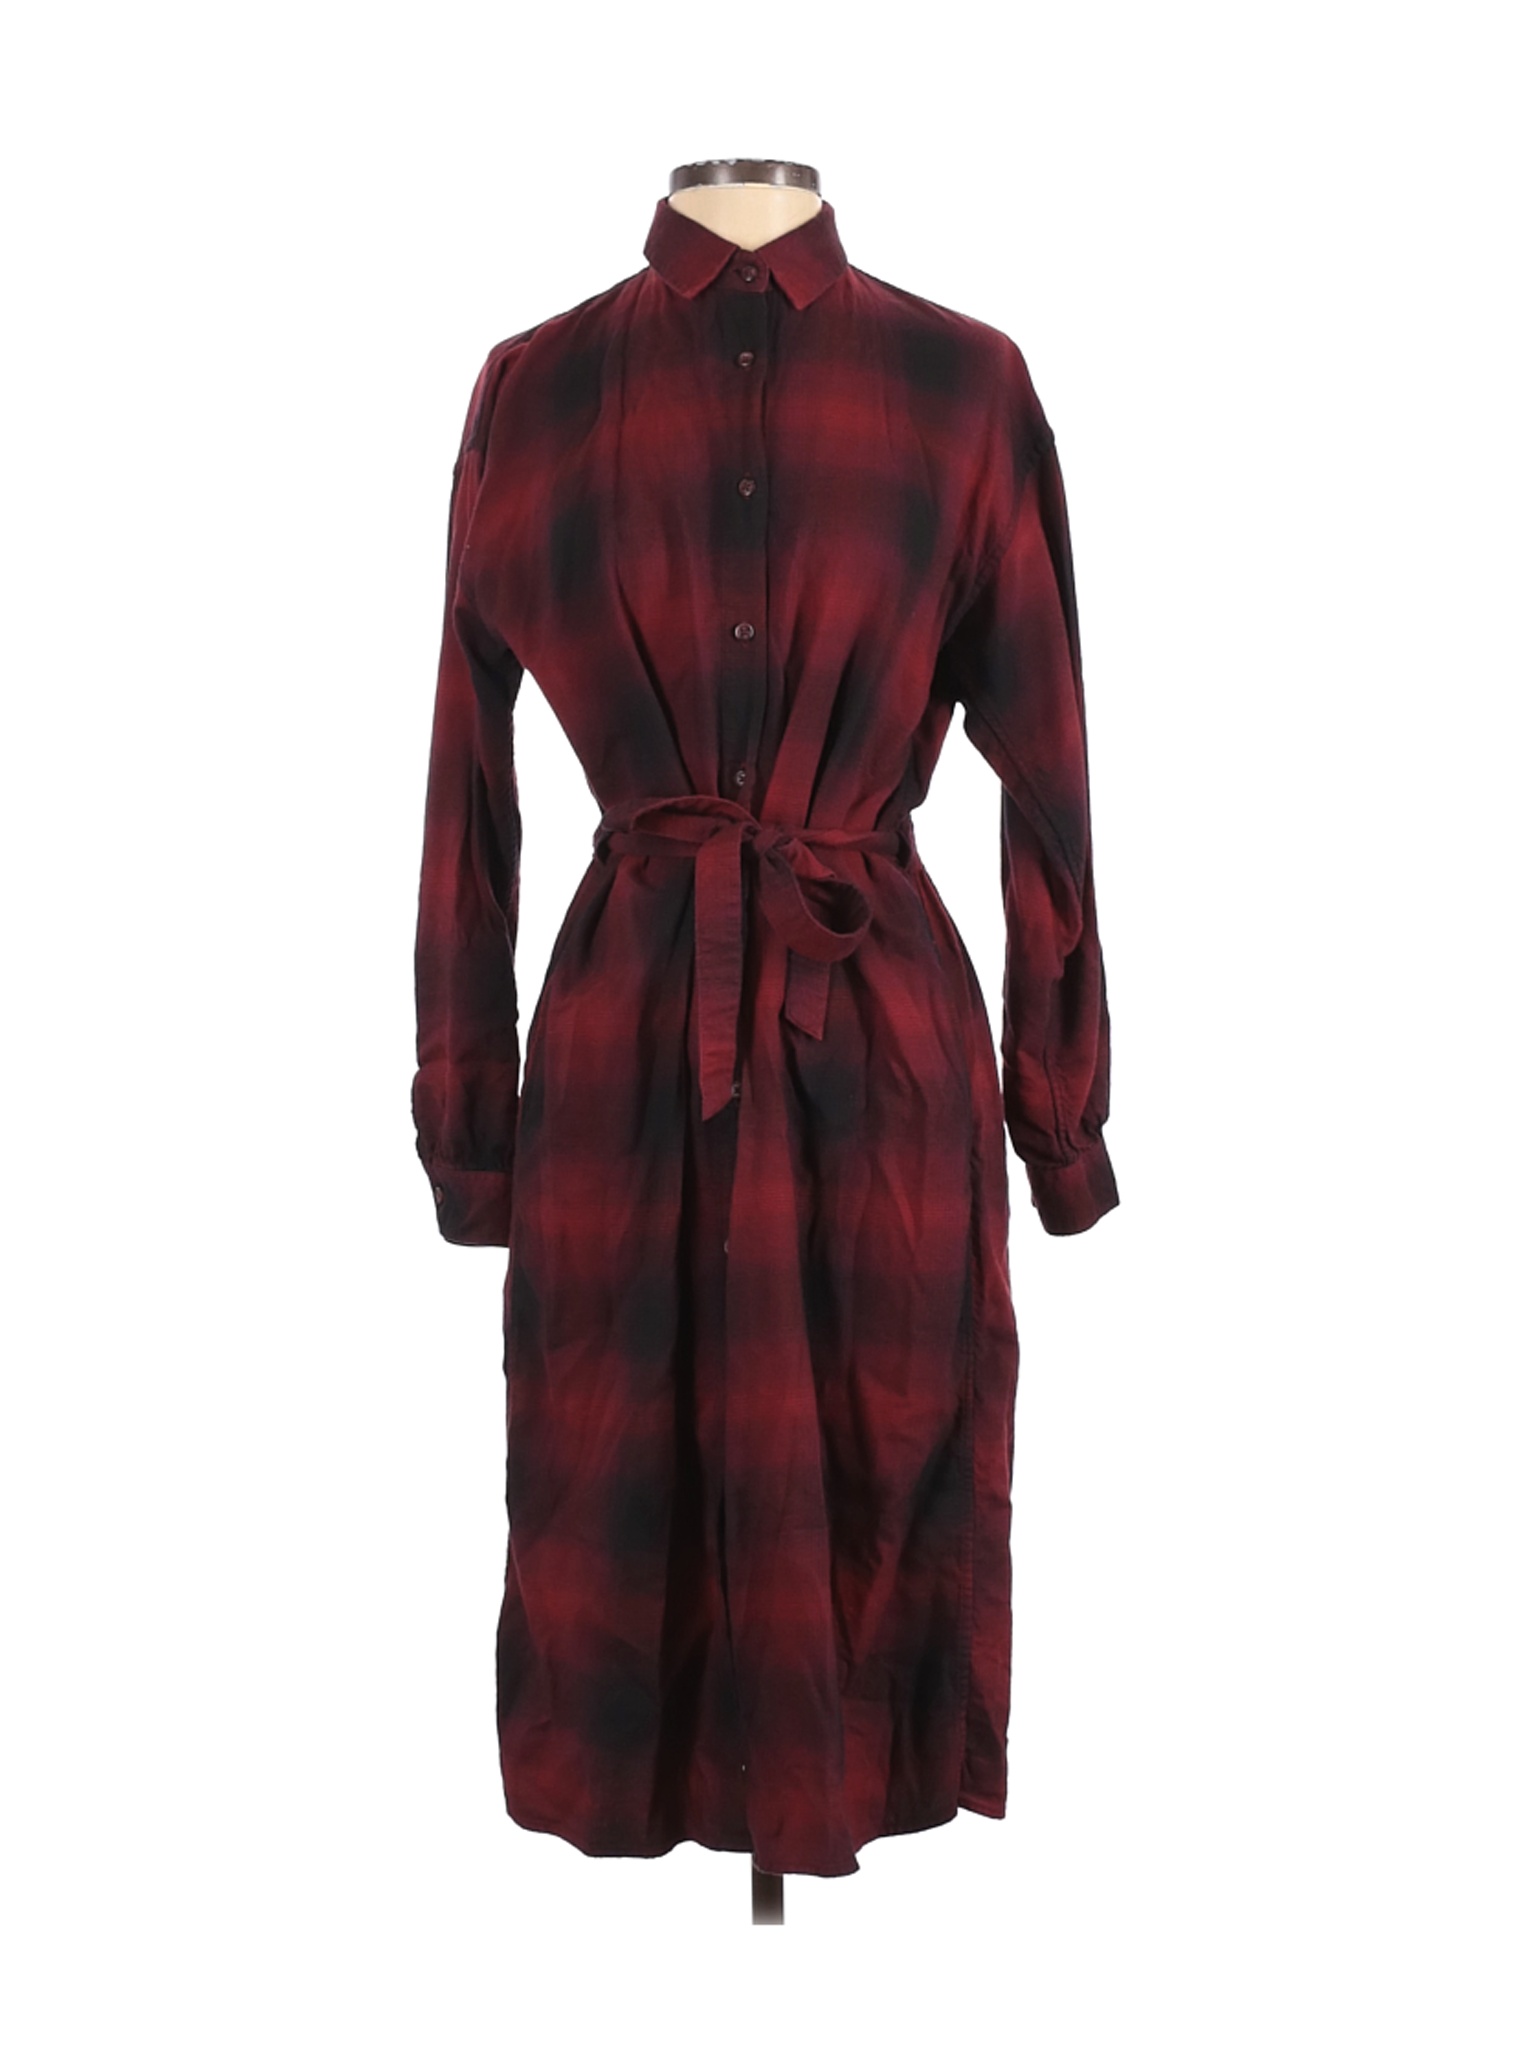 Uniqlo Women Red Casual Dress XS | eBay